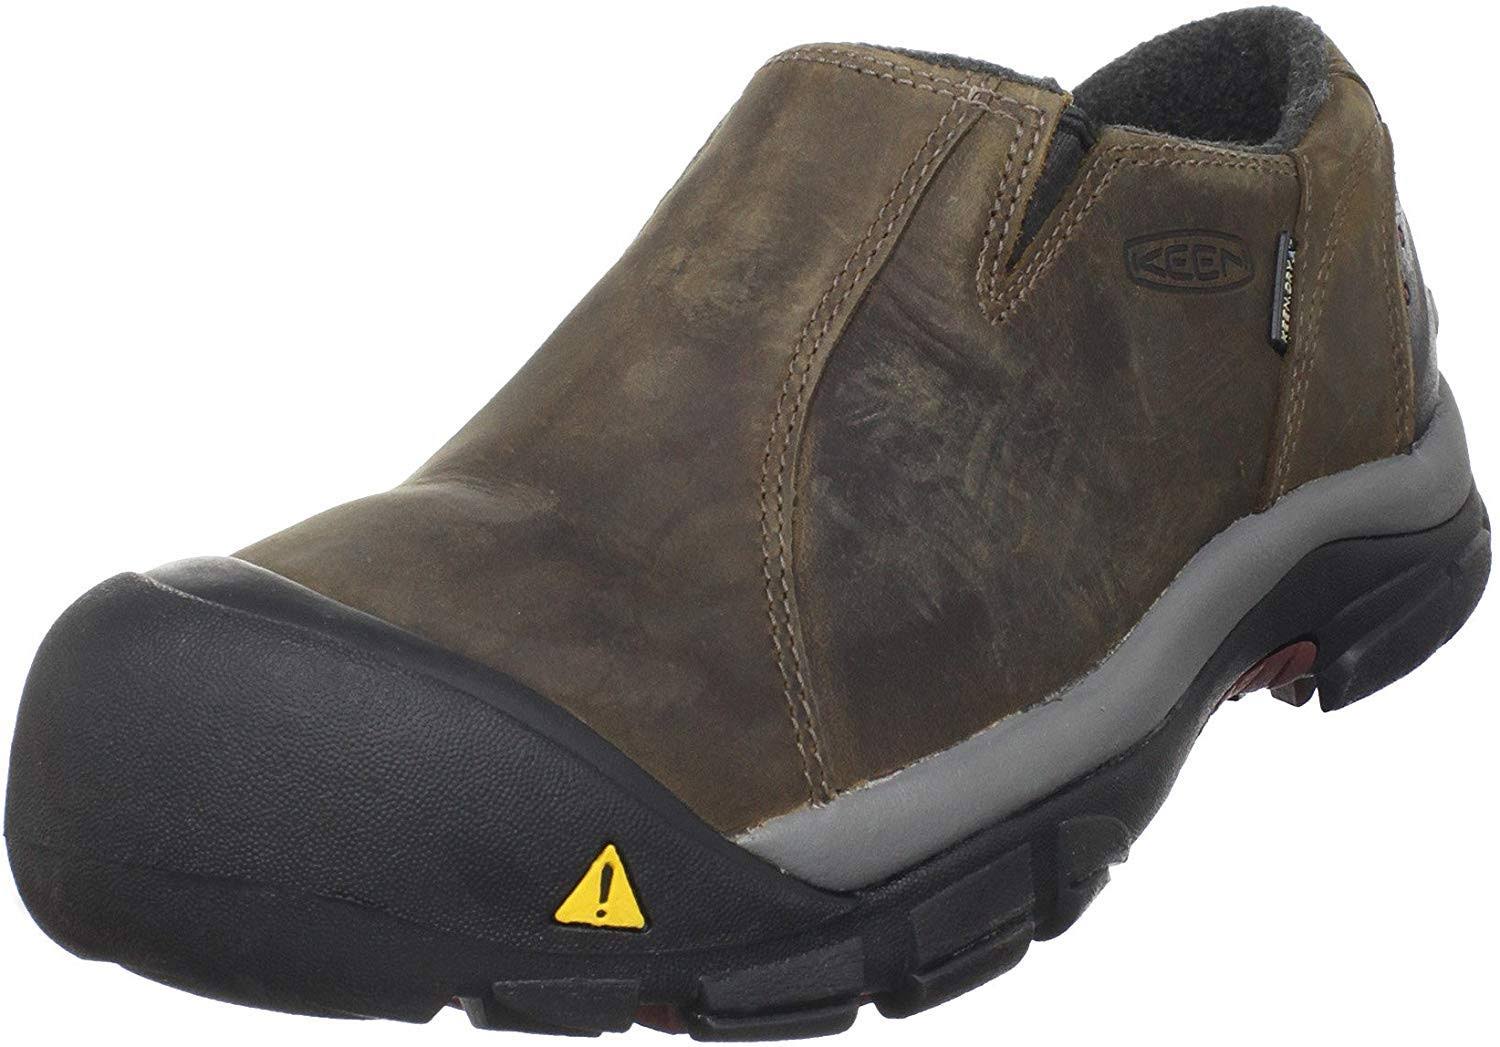 Keen Men's Brixen Waterproof Low Shoes - Slate Black/Madder Brown, Size 13